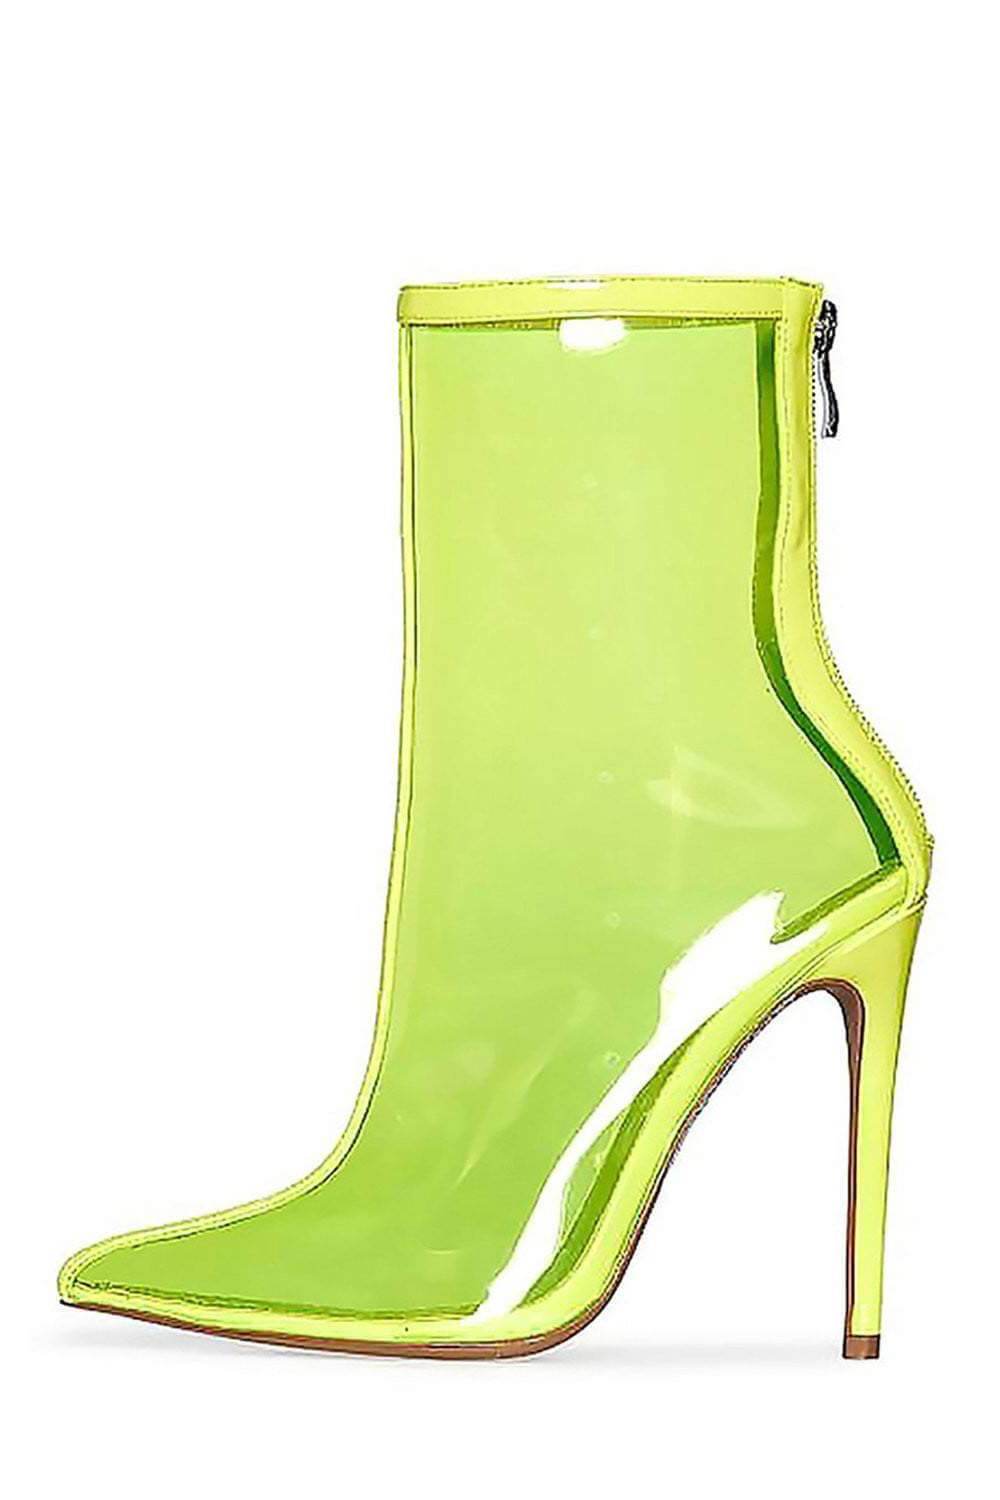 yellow clear heels